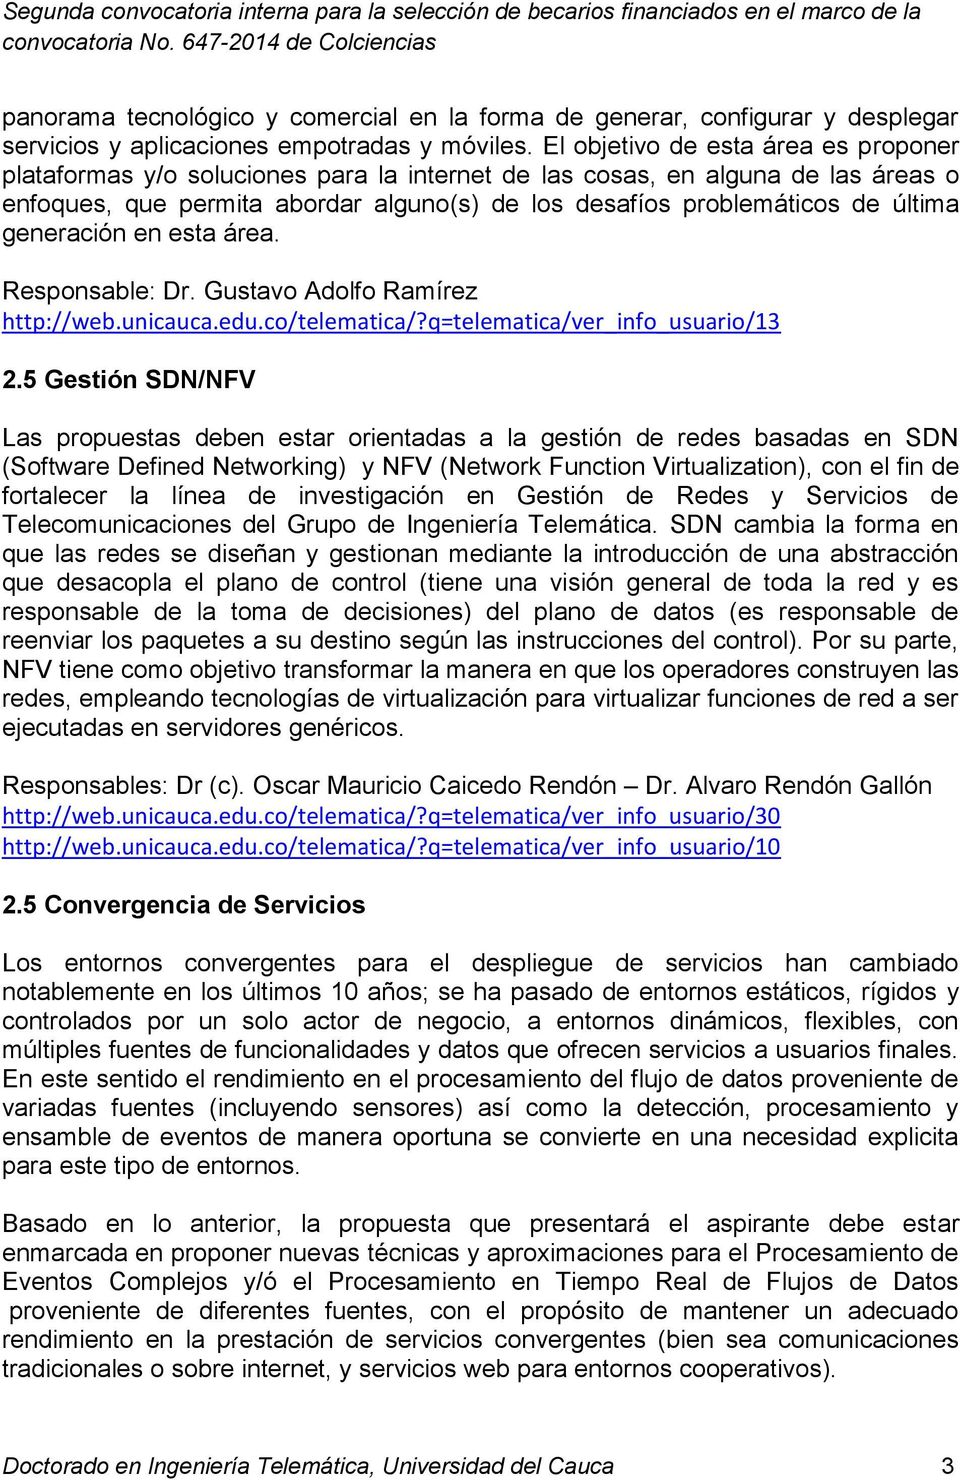 generación en esta área. Responsable: Dr. Gustavo Adolfo Ramírez http://web.unicauca.edu.co/telematica/?q=telematica/ver_info_usuario/13 2.